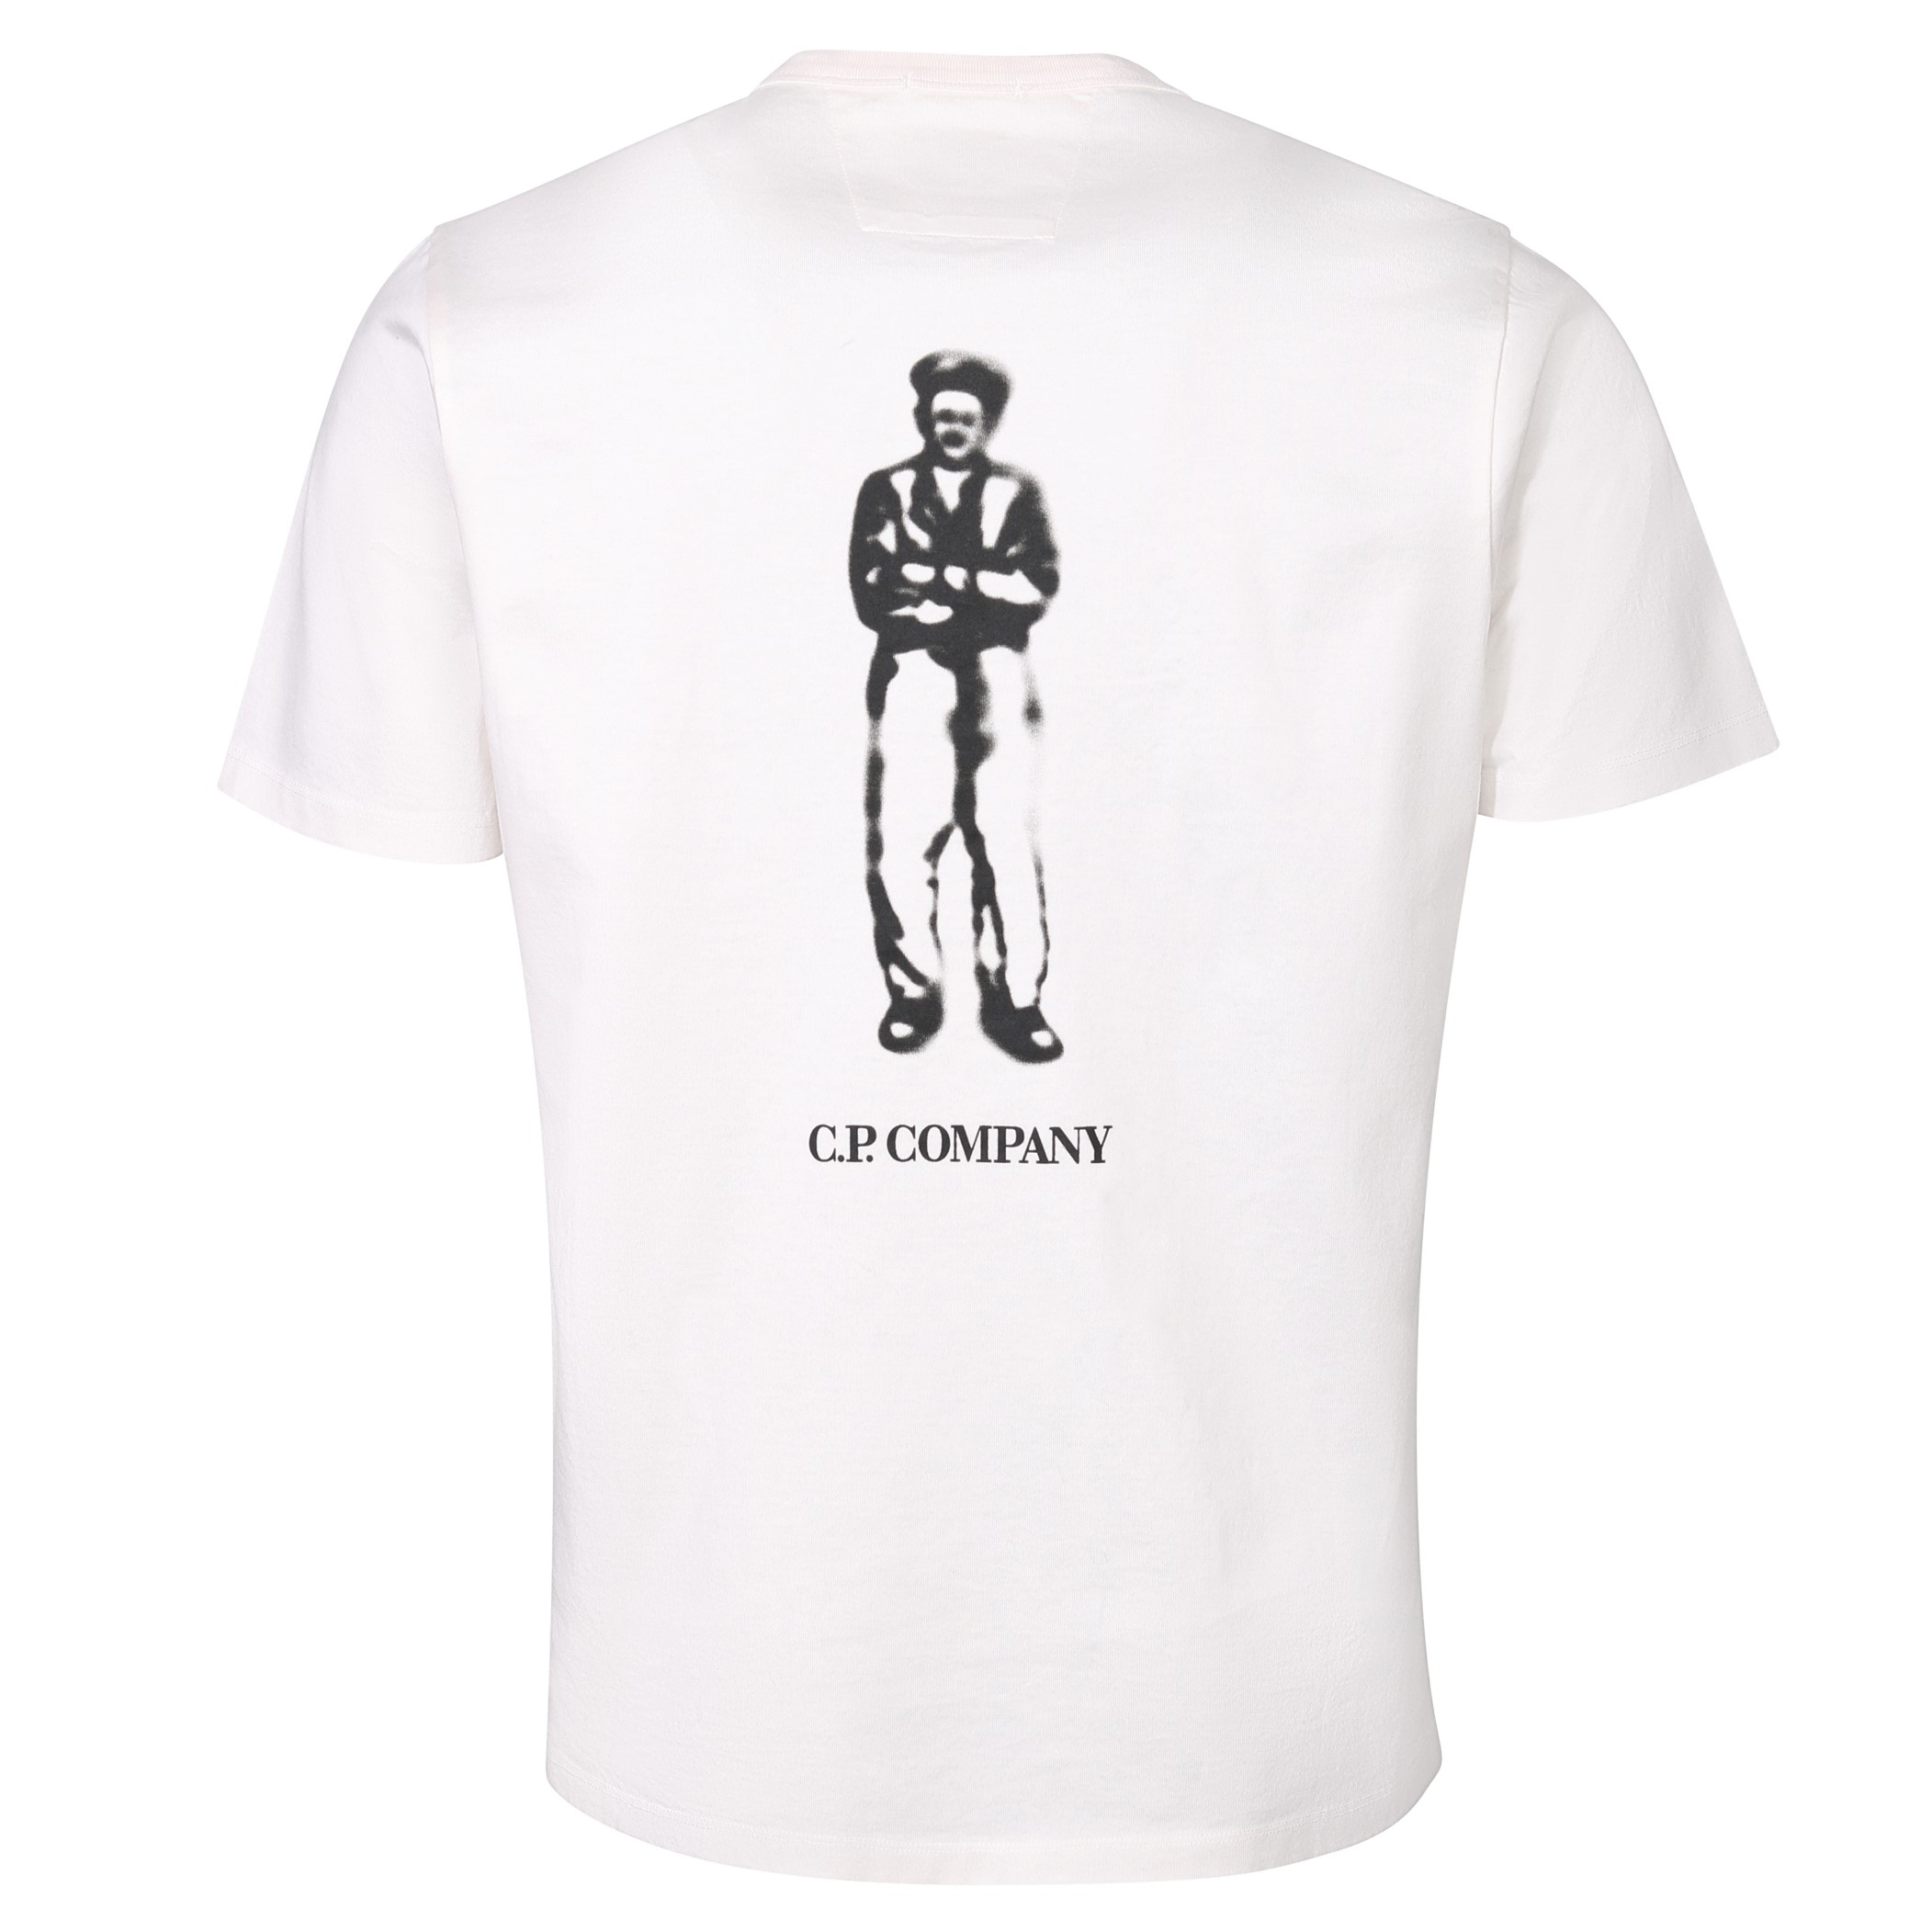 C.P. COMPANY T-Shirt in White XXXL